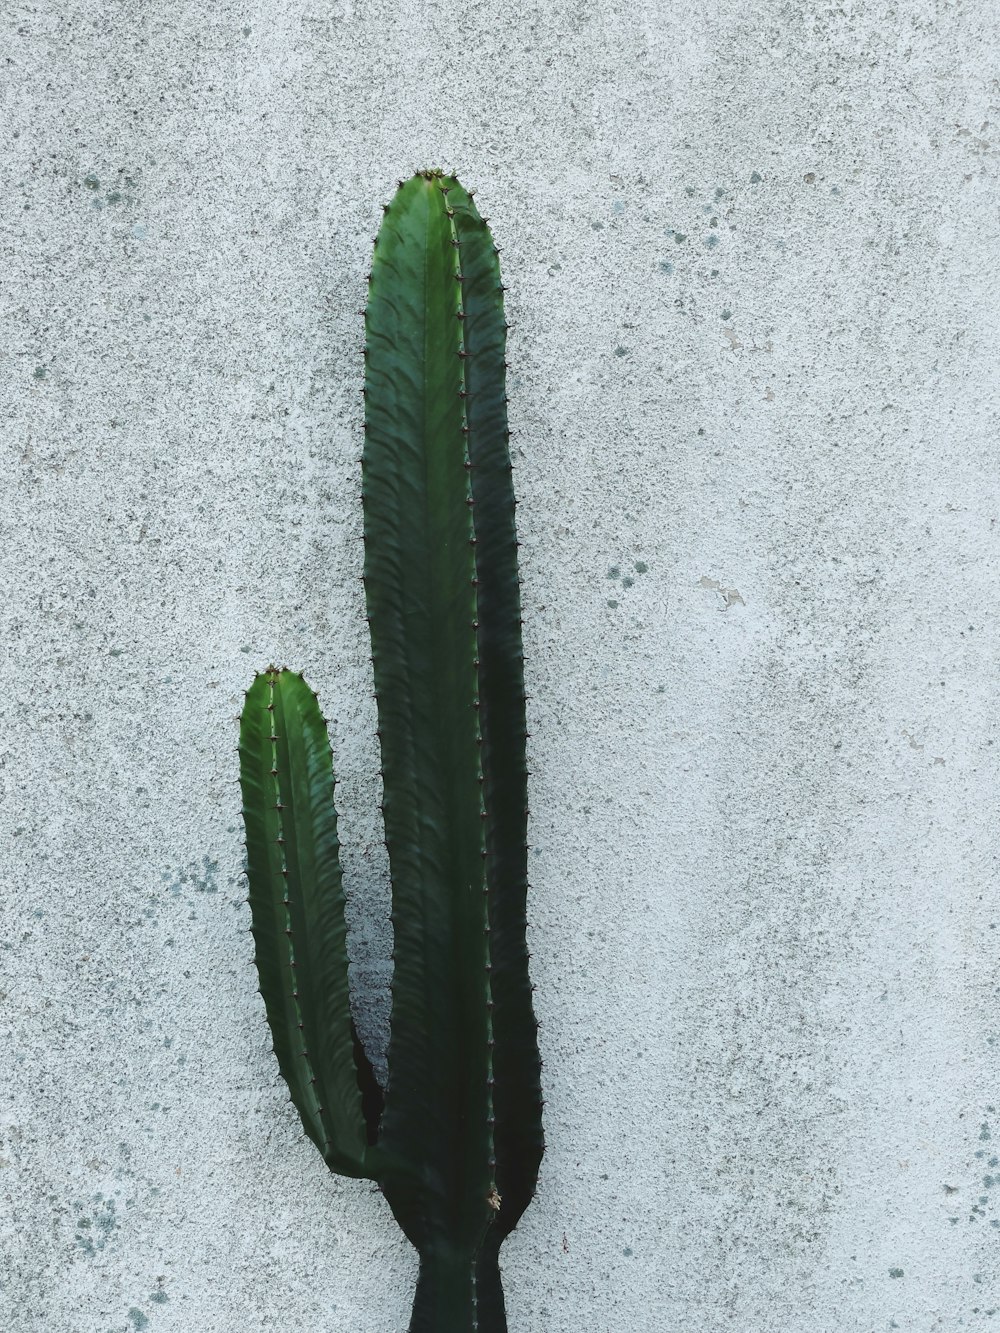 Cactus verde sobre piso de concreto gris